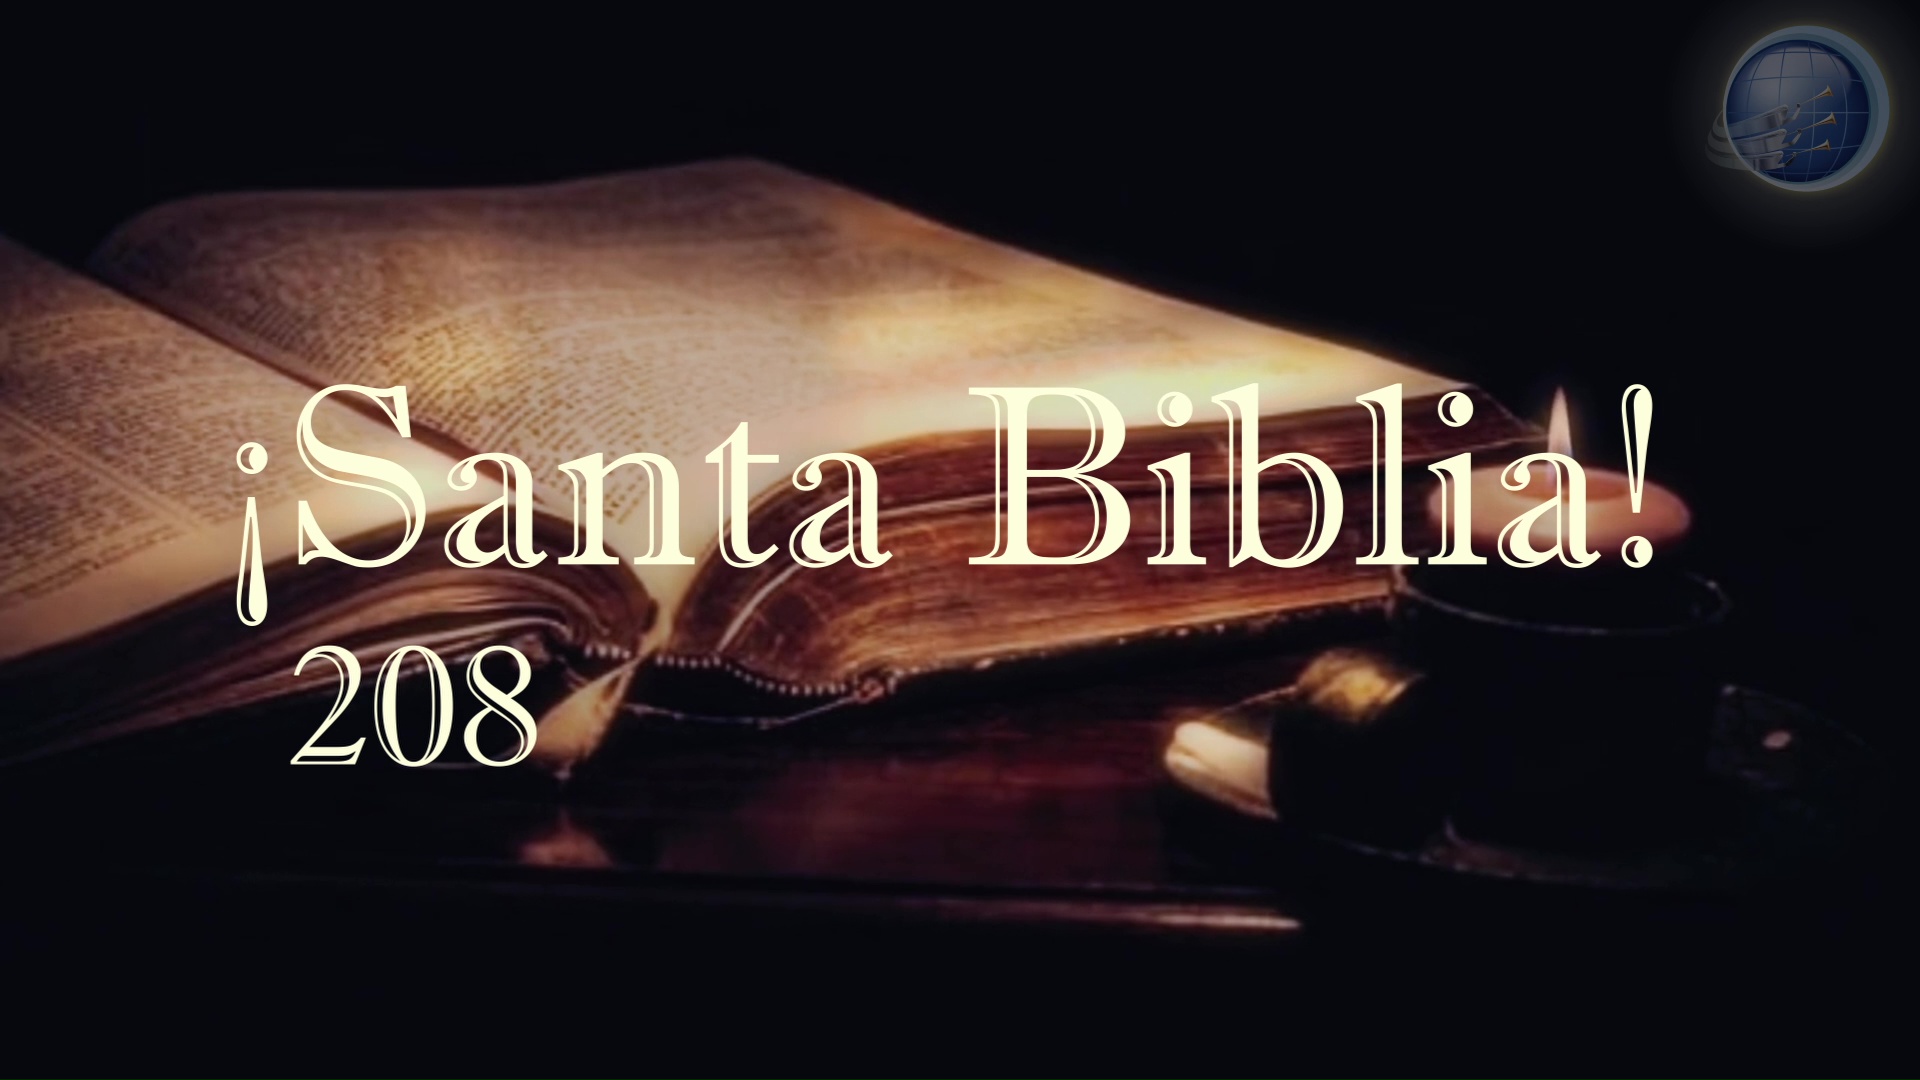 208 - Santa Biblia!.jpg